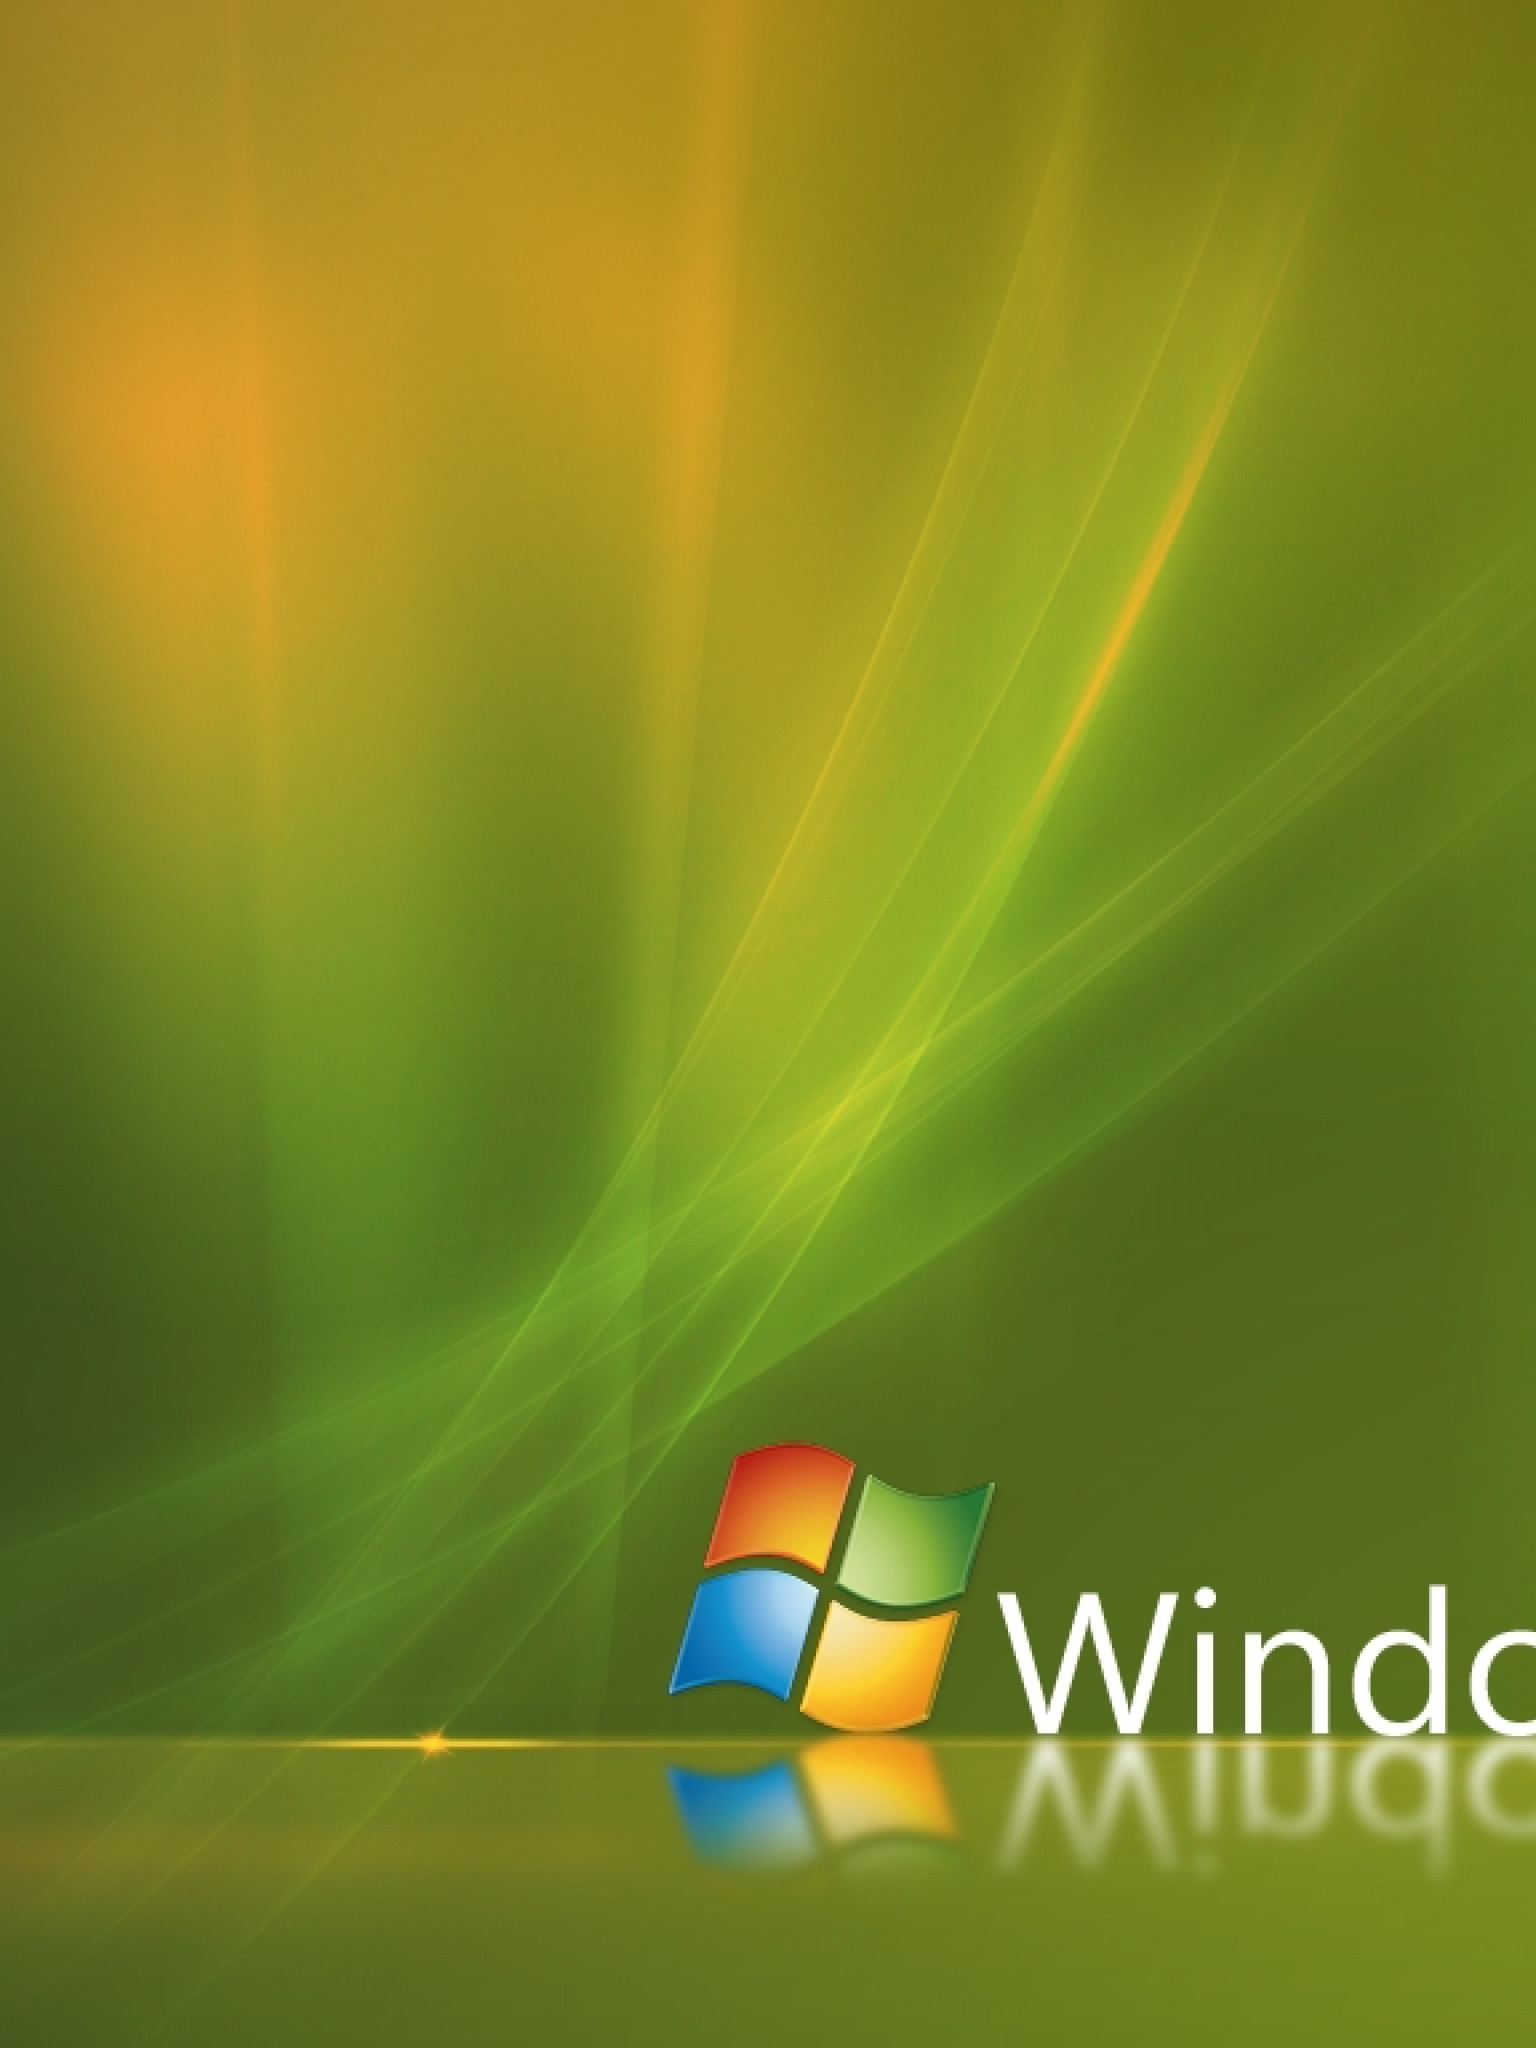 Windows7 (90).jpg